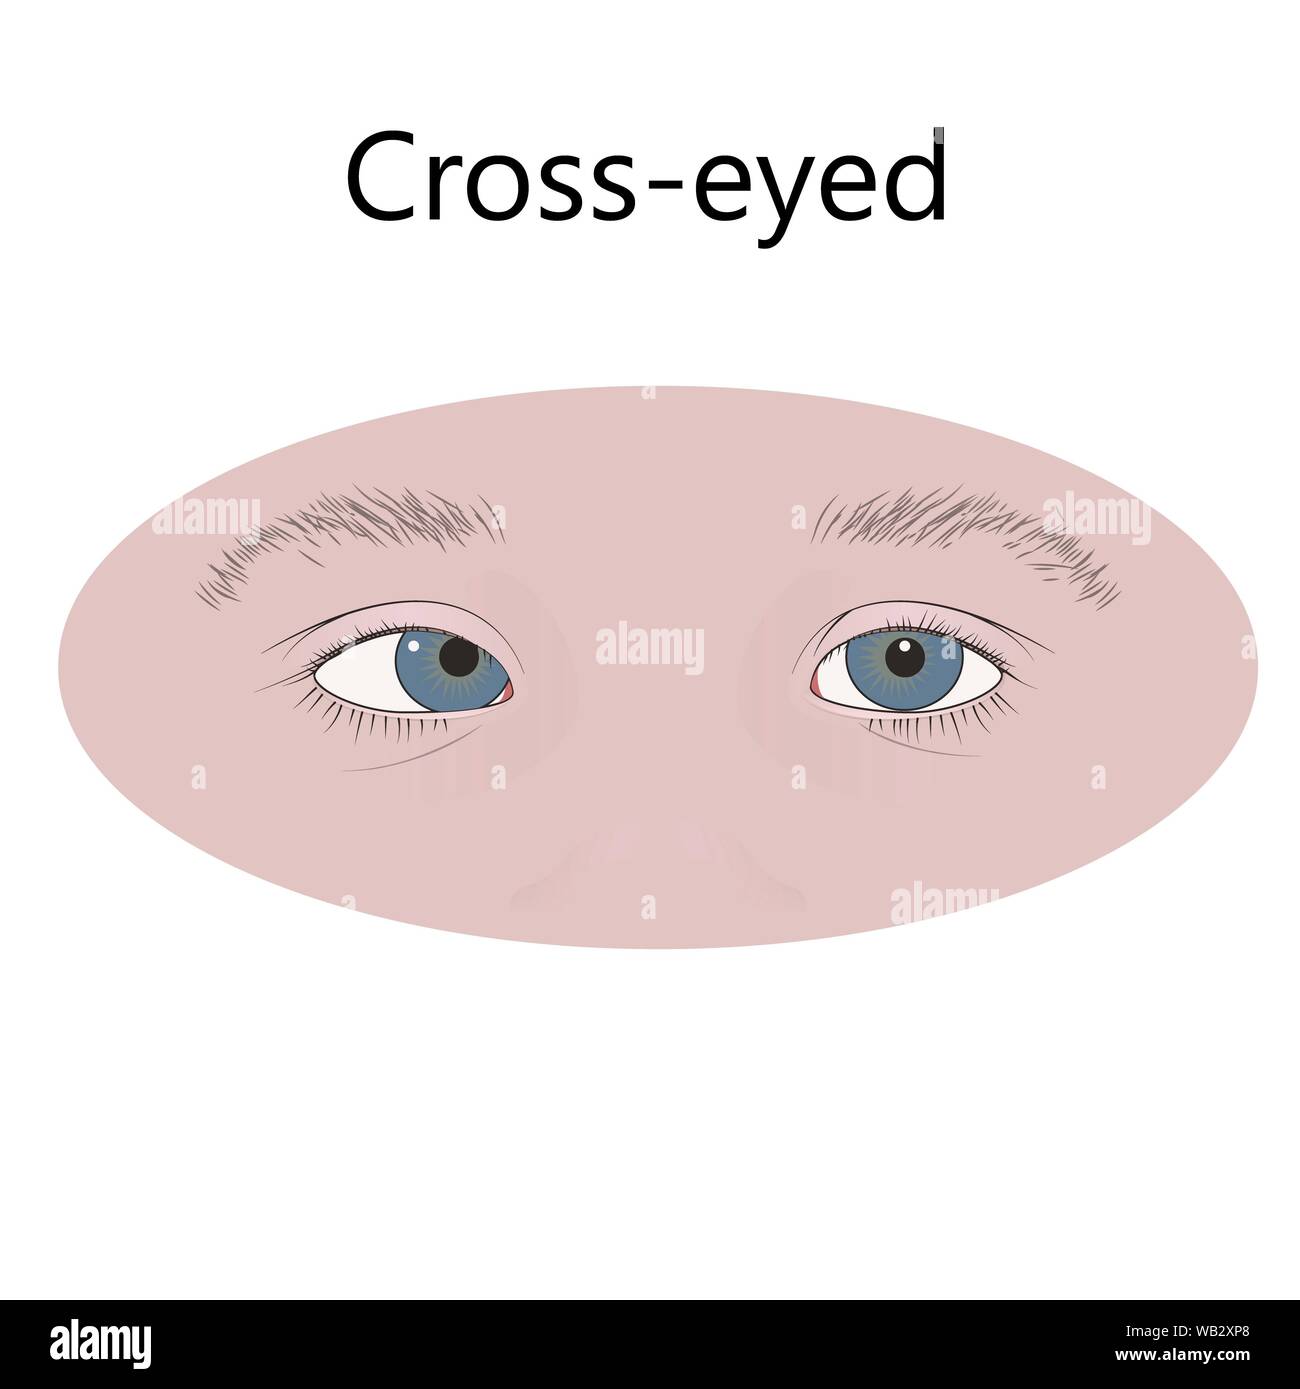 Cross-eyed child, illustration. Strabismus, esotropia, inward eyes. Stock Photo